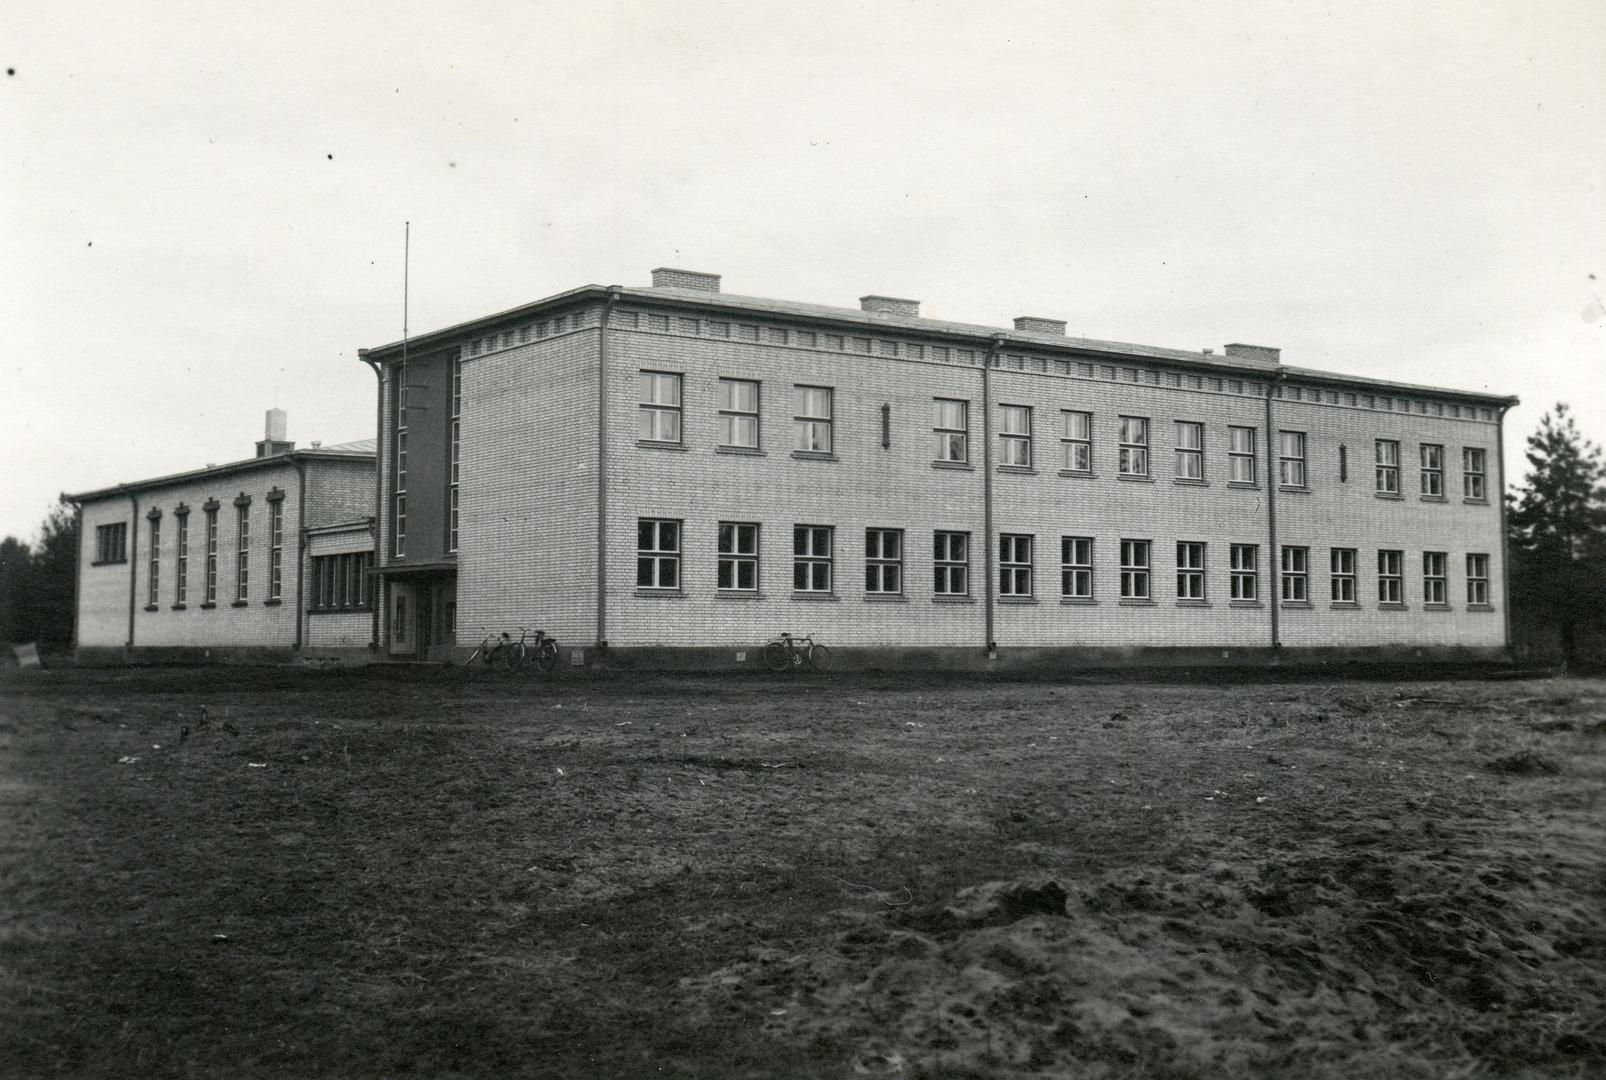 Laiksaare rural municipality Massiaru 6-kl Start school building (ehit 1939)